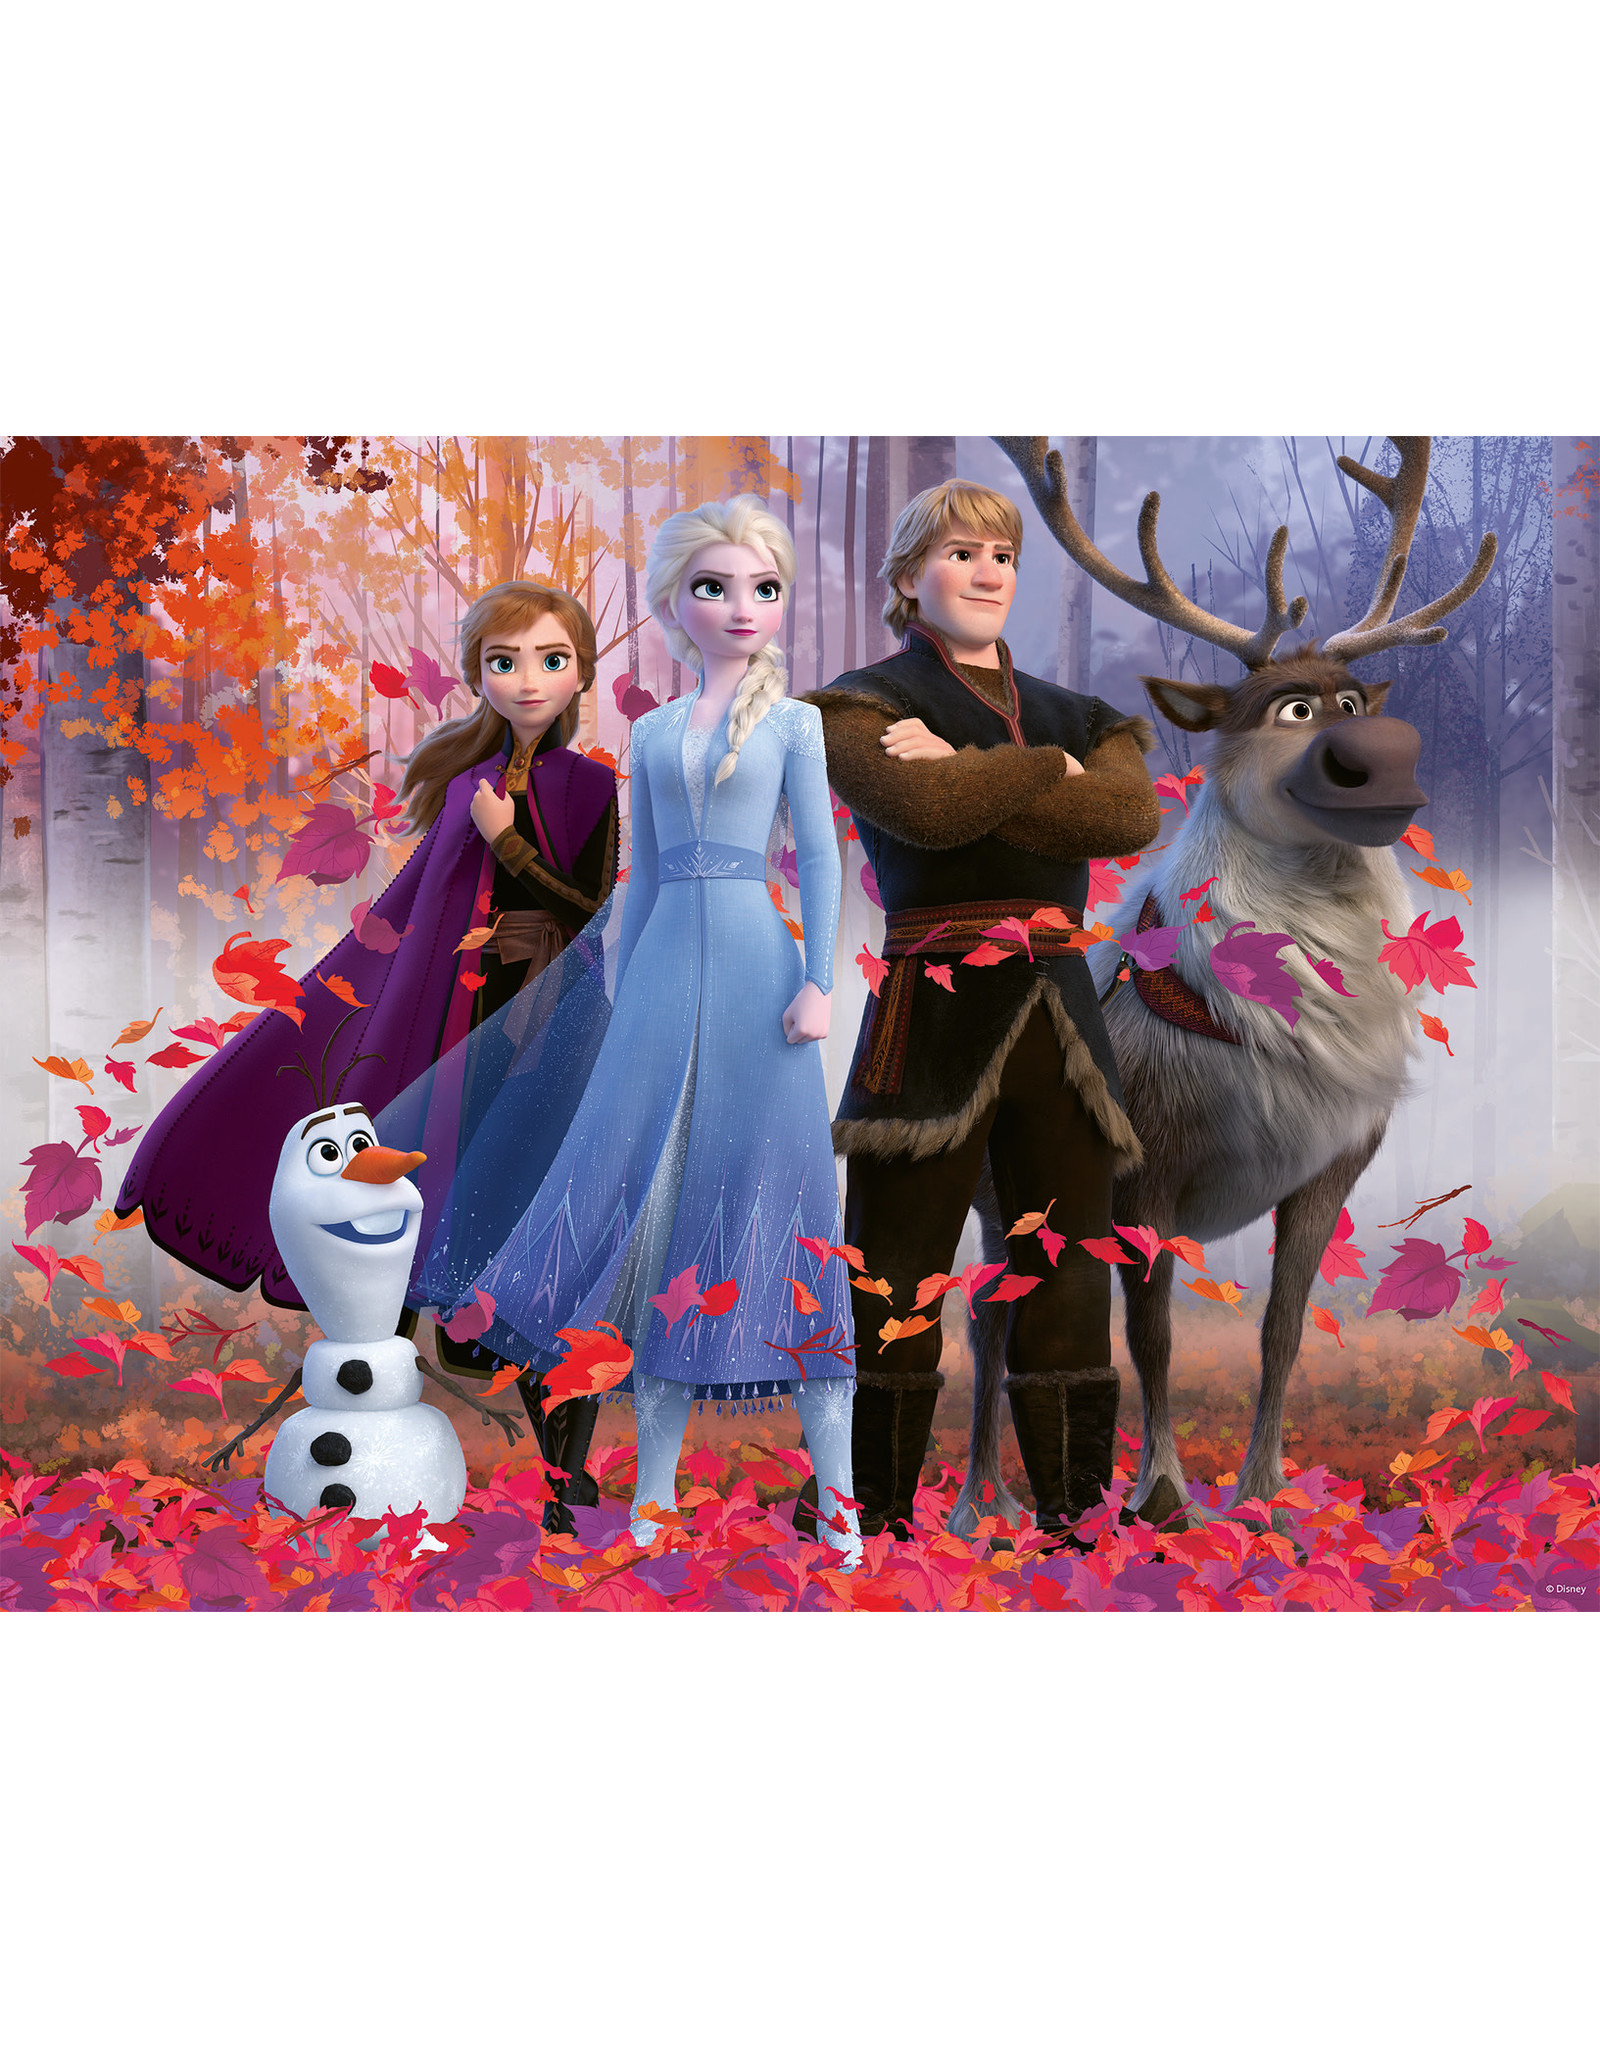 Ravensburger Ravensburger Puzzel Disney Frozen 2 - De Magie van het Bos 100 XXL